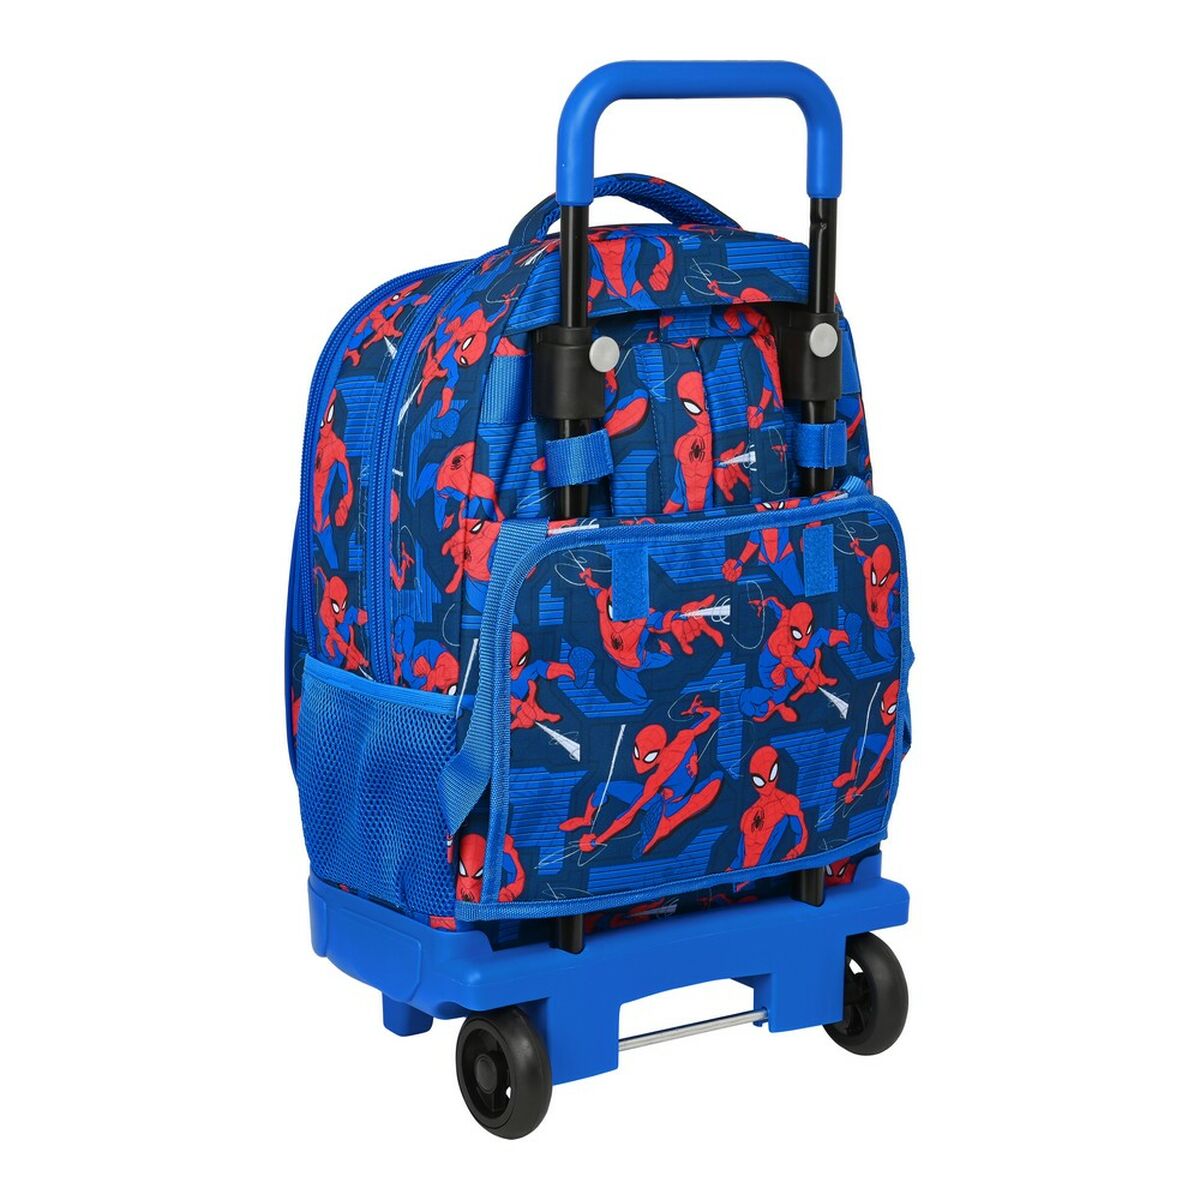 Mochila Escolar con Ruedas Spiderman Great power Rojo Azul (33 x 45 x 22 cm)